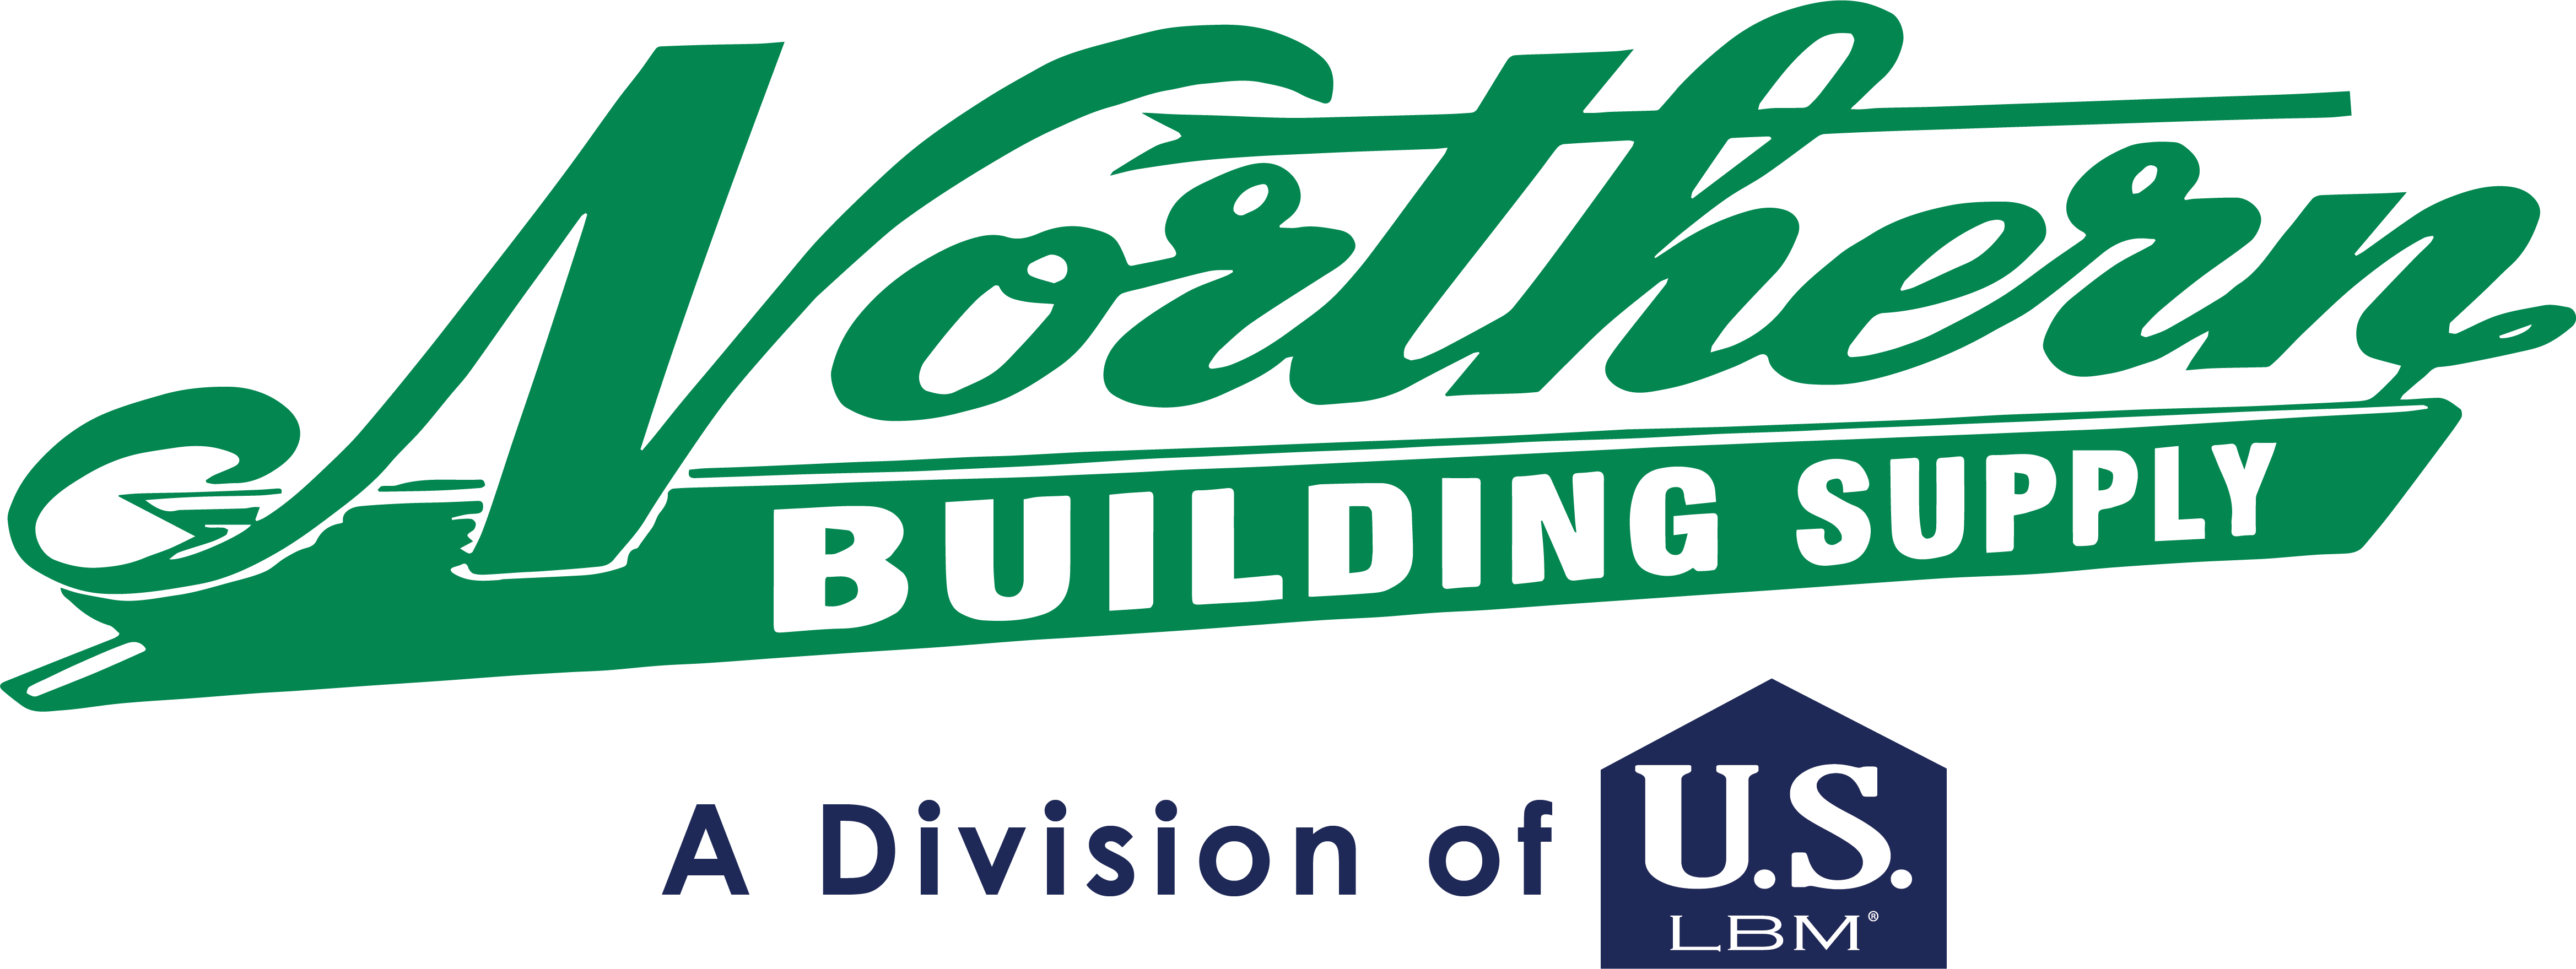 Northern Building Supply Logo